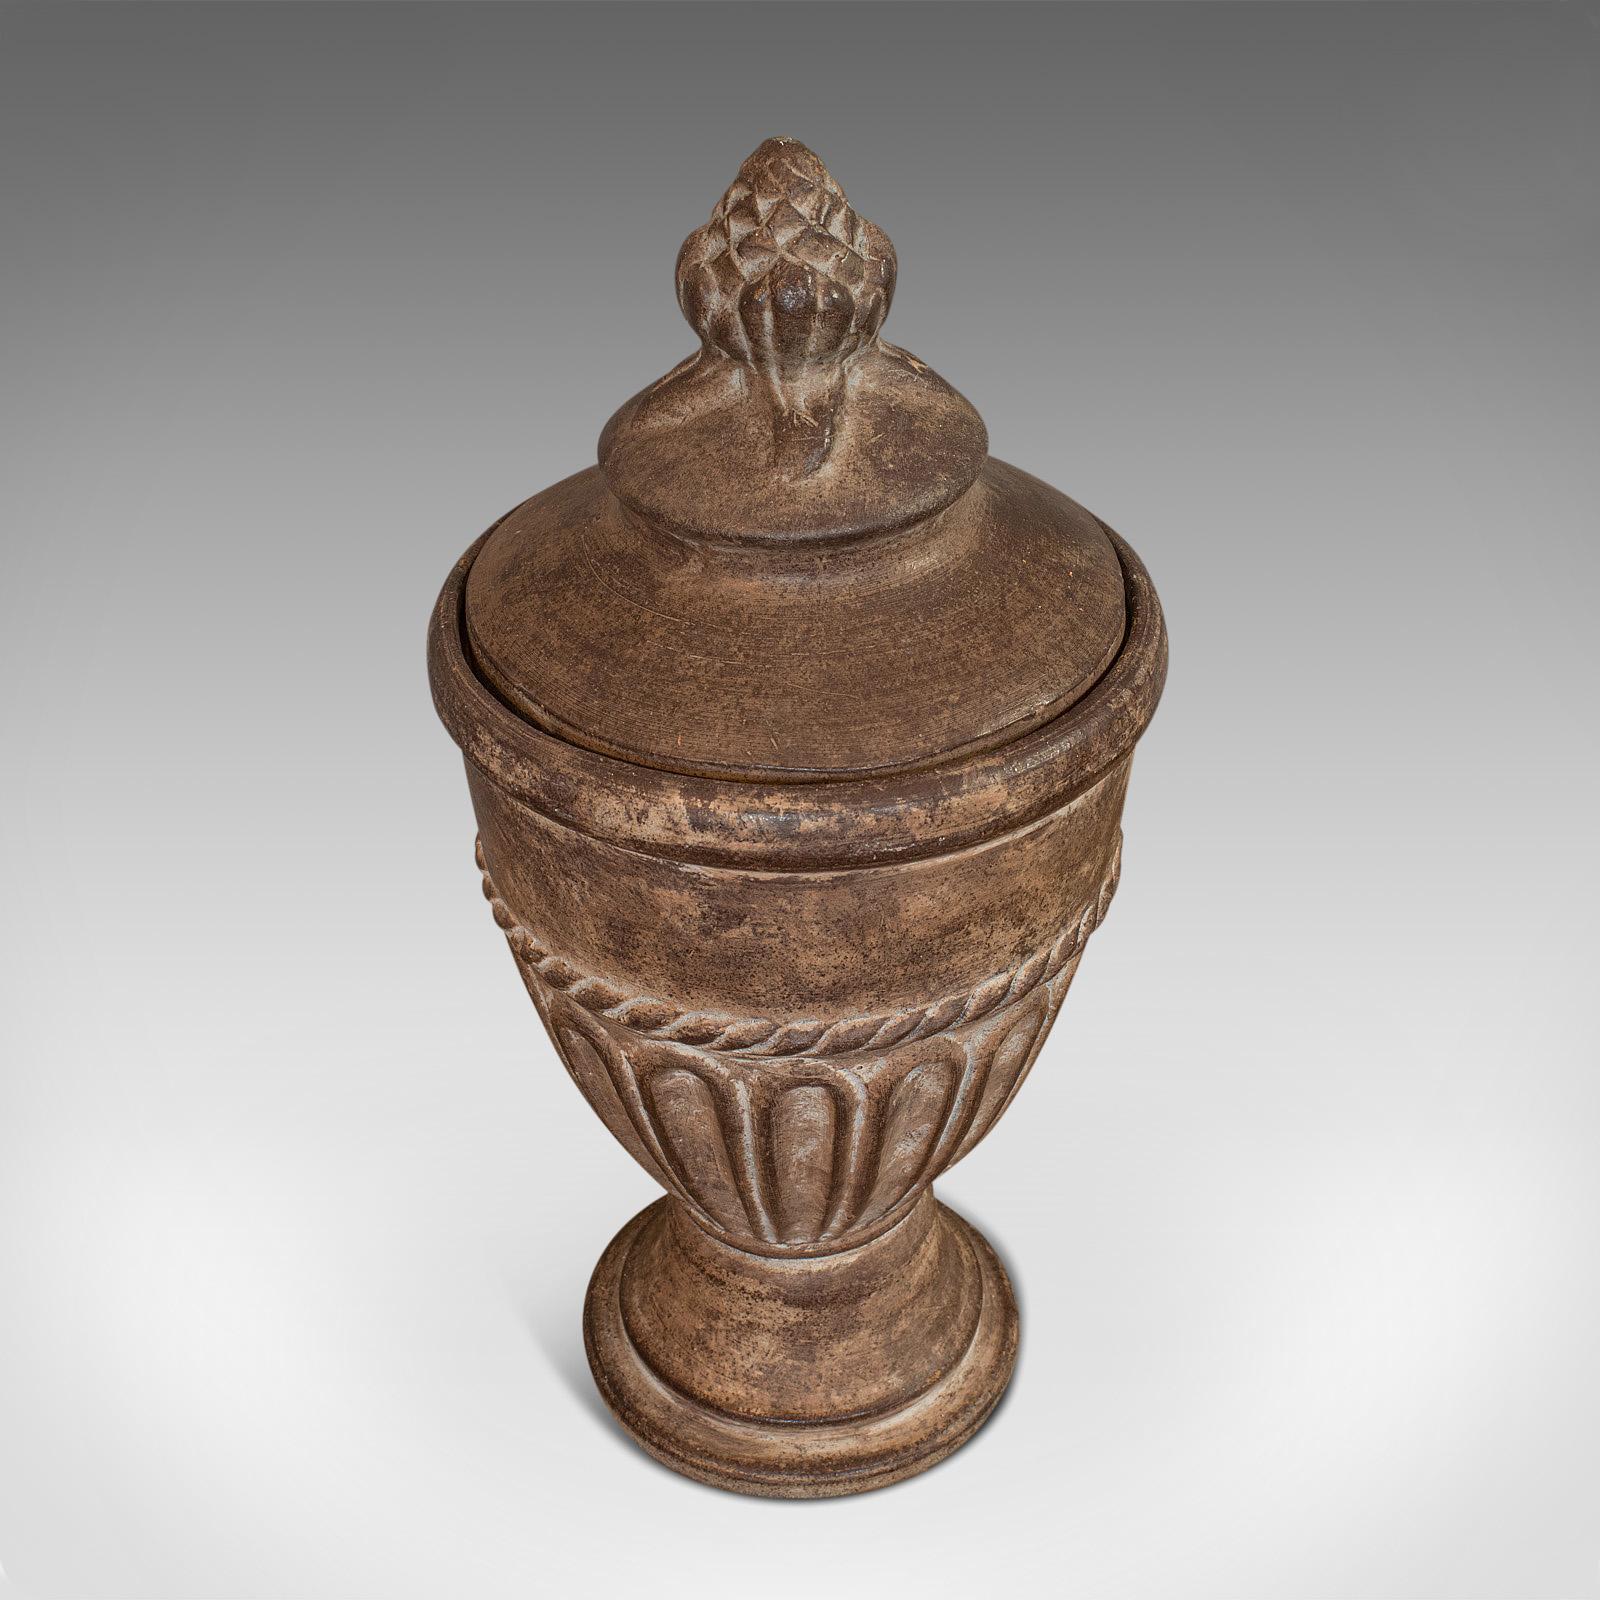 Victorian Vintage Urn, English, Terracotta, Decorative, Garden, Fireside, Ornament